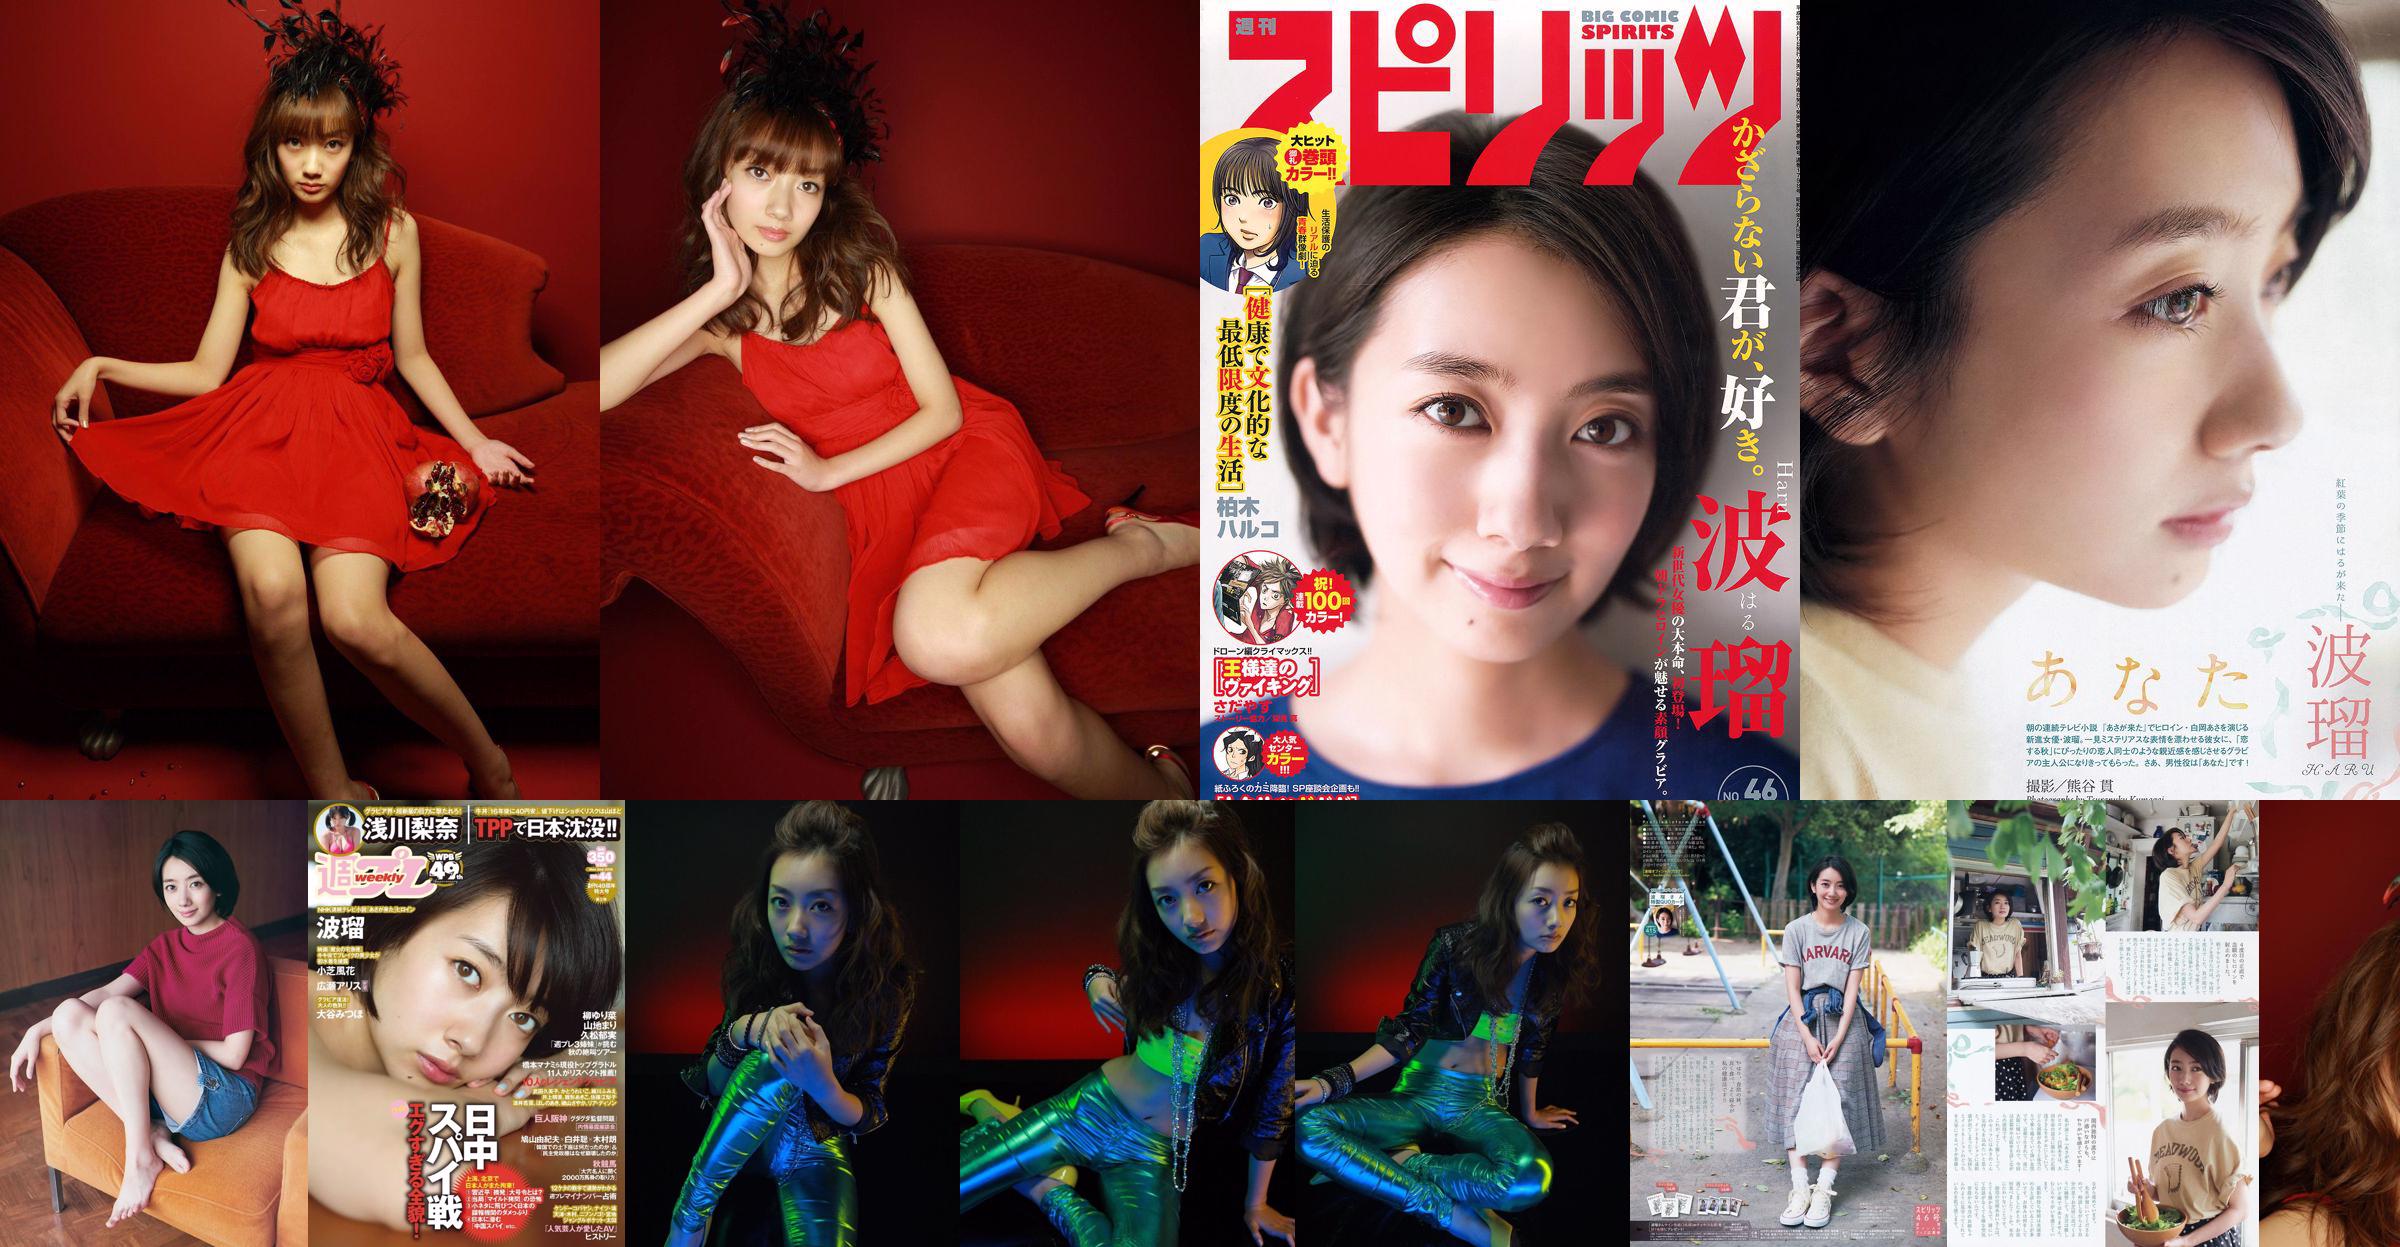 Haru, Asagawa Rina, Xiaozhi Fenghua, 広瀬アリス, Otani みつほ [Weekly Playboy] 2015 No.44 Photo Magazine No.335a56 Page 1